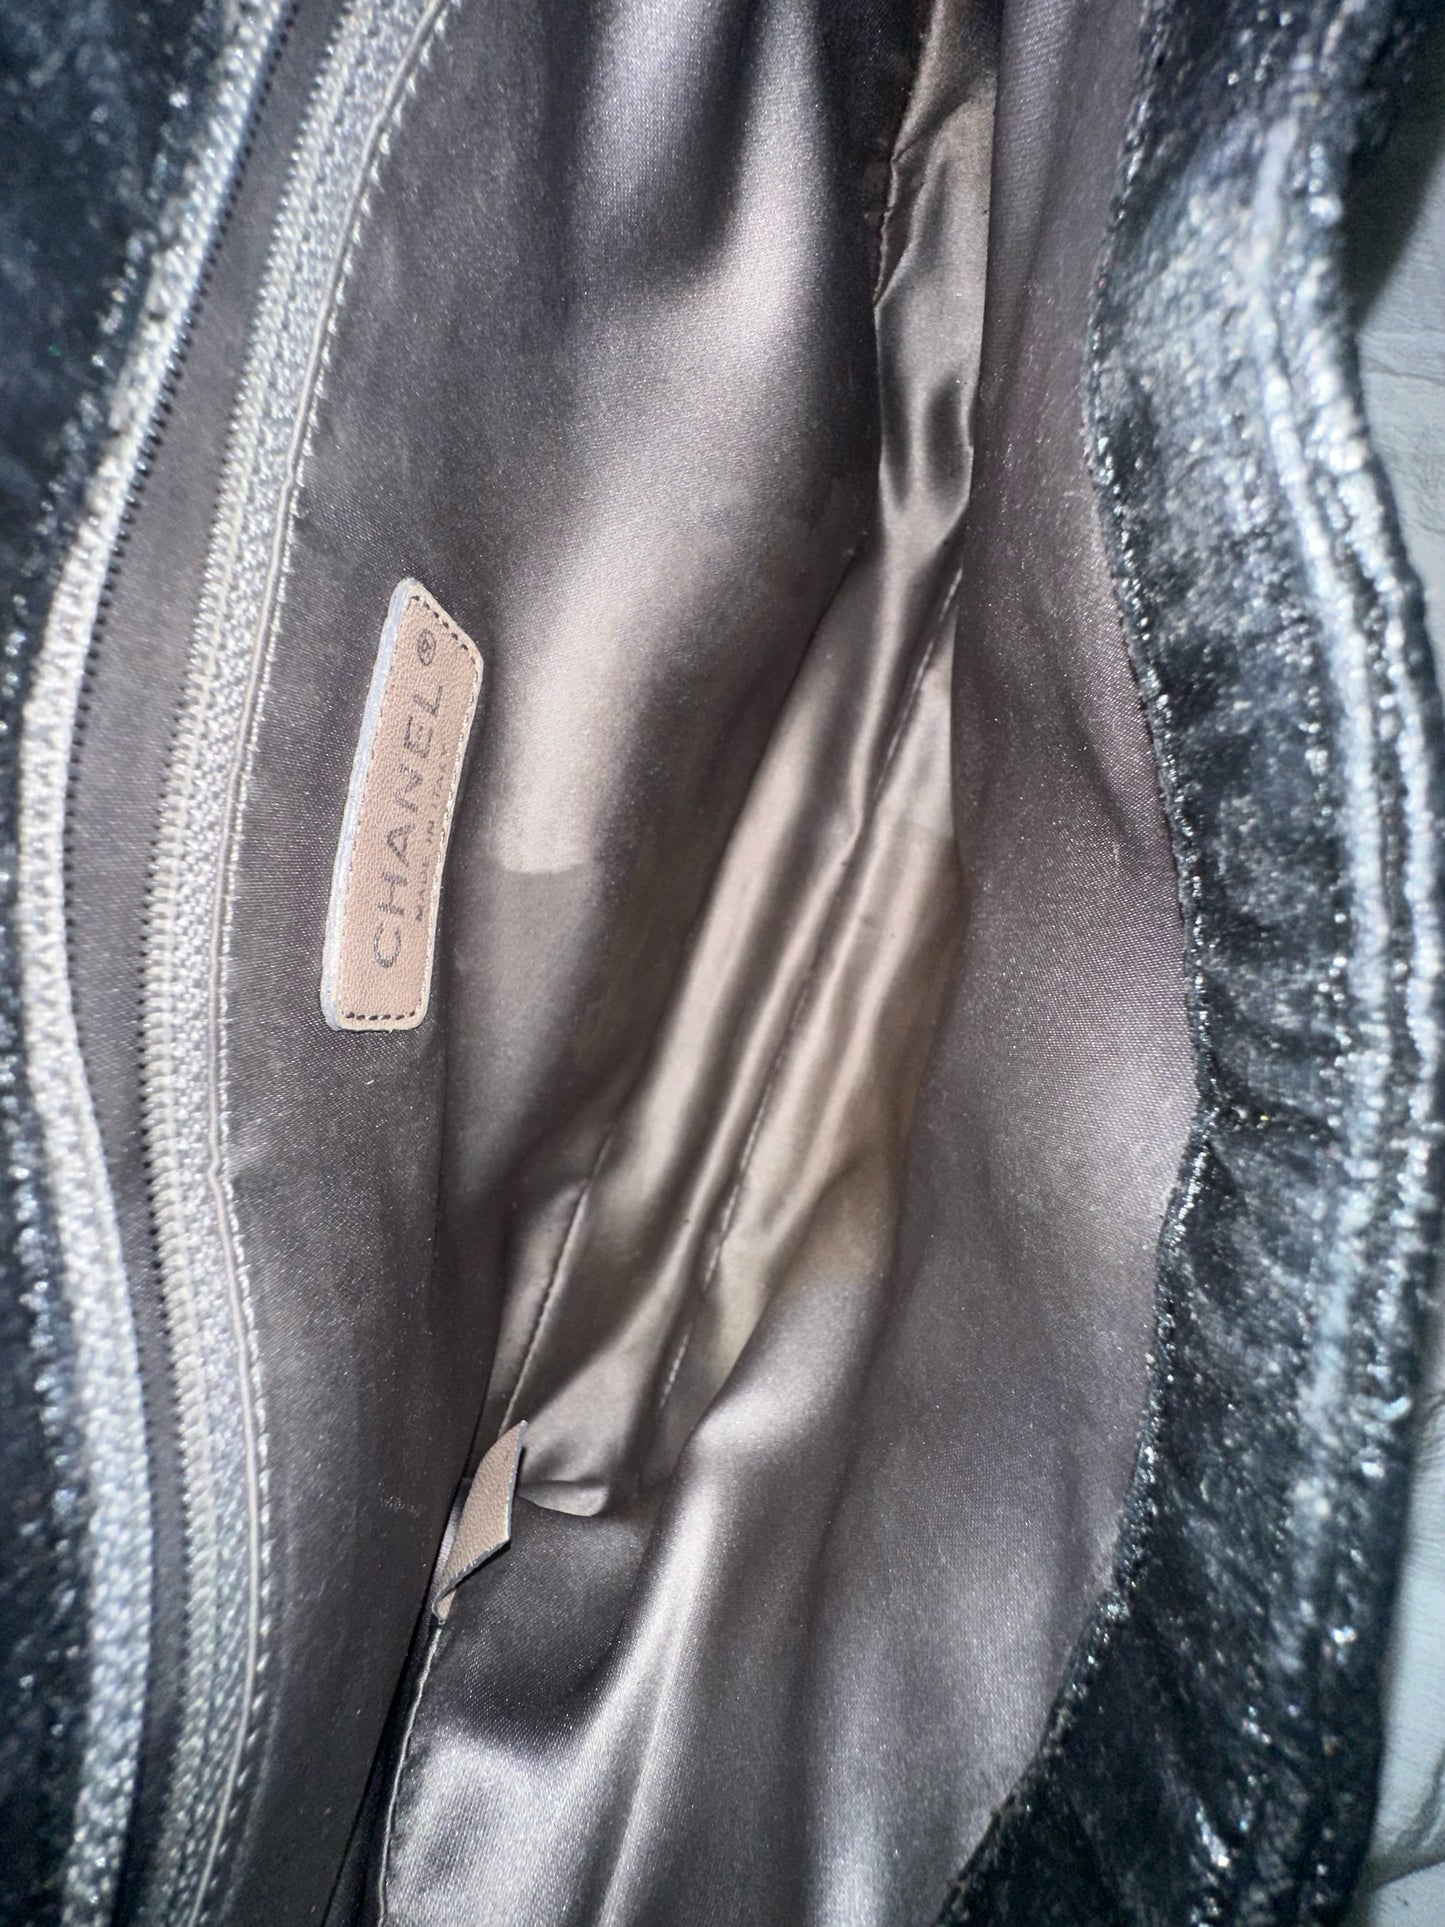 Chanel Black Textured Coated Nylon Flap Bag